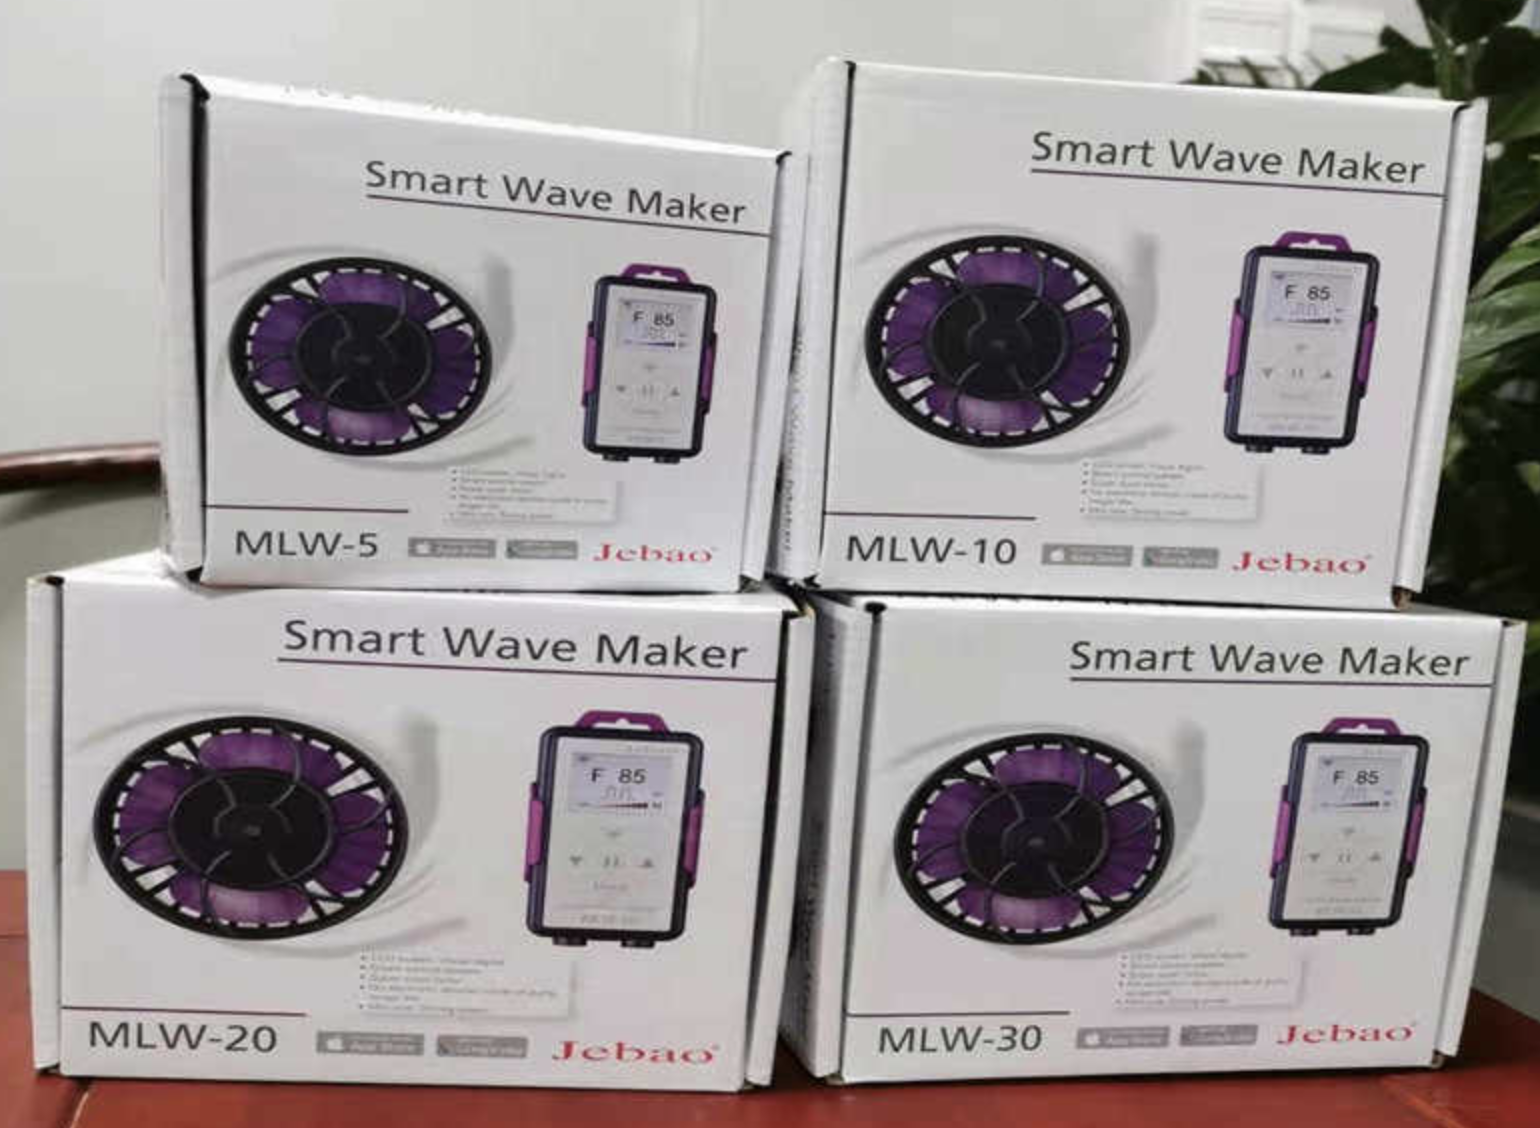 Jecod/Jebao MLW-5 Wi-Fi stromingspompen (sine wave)